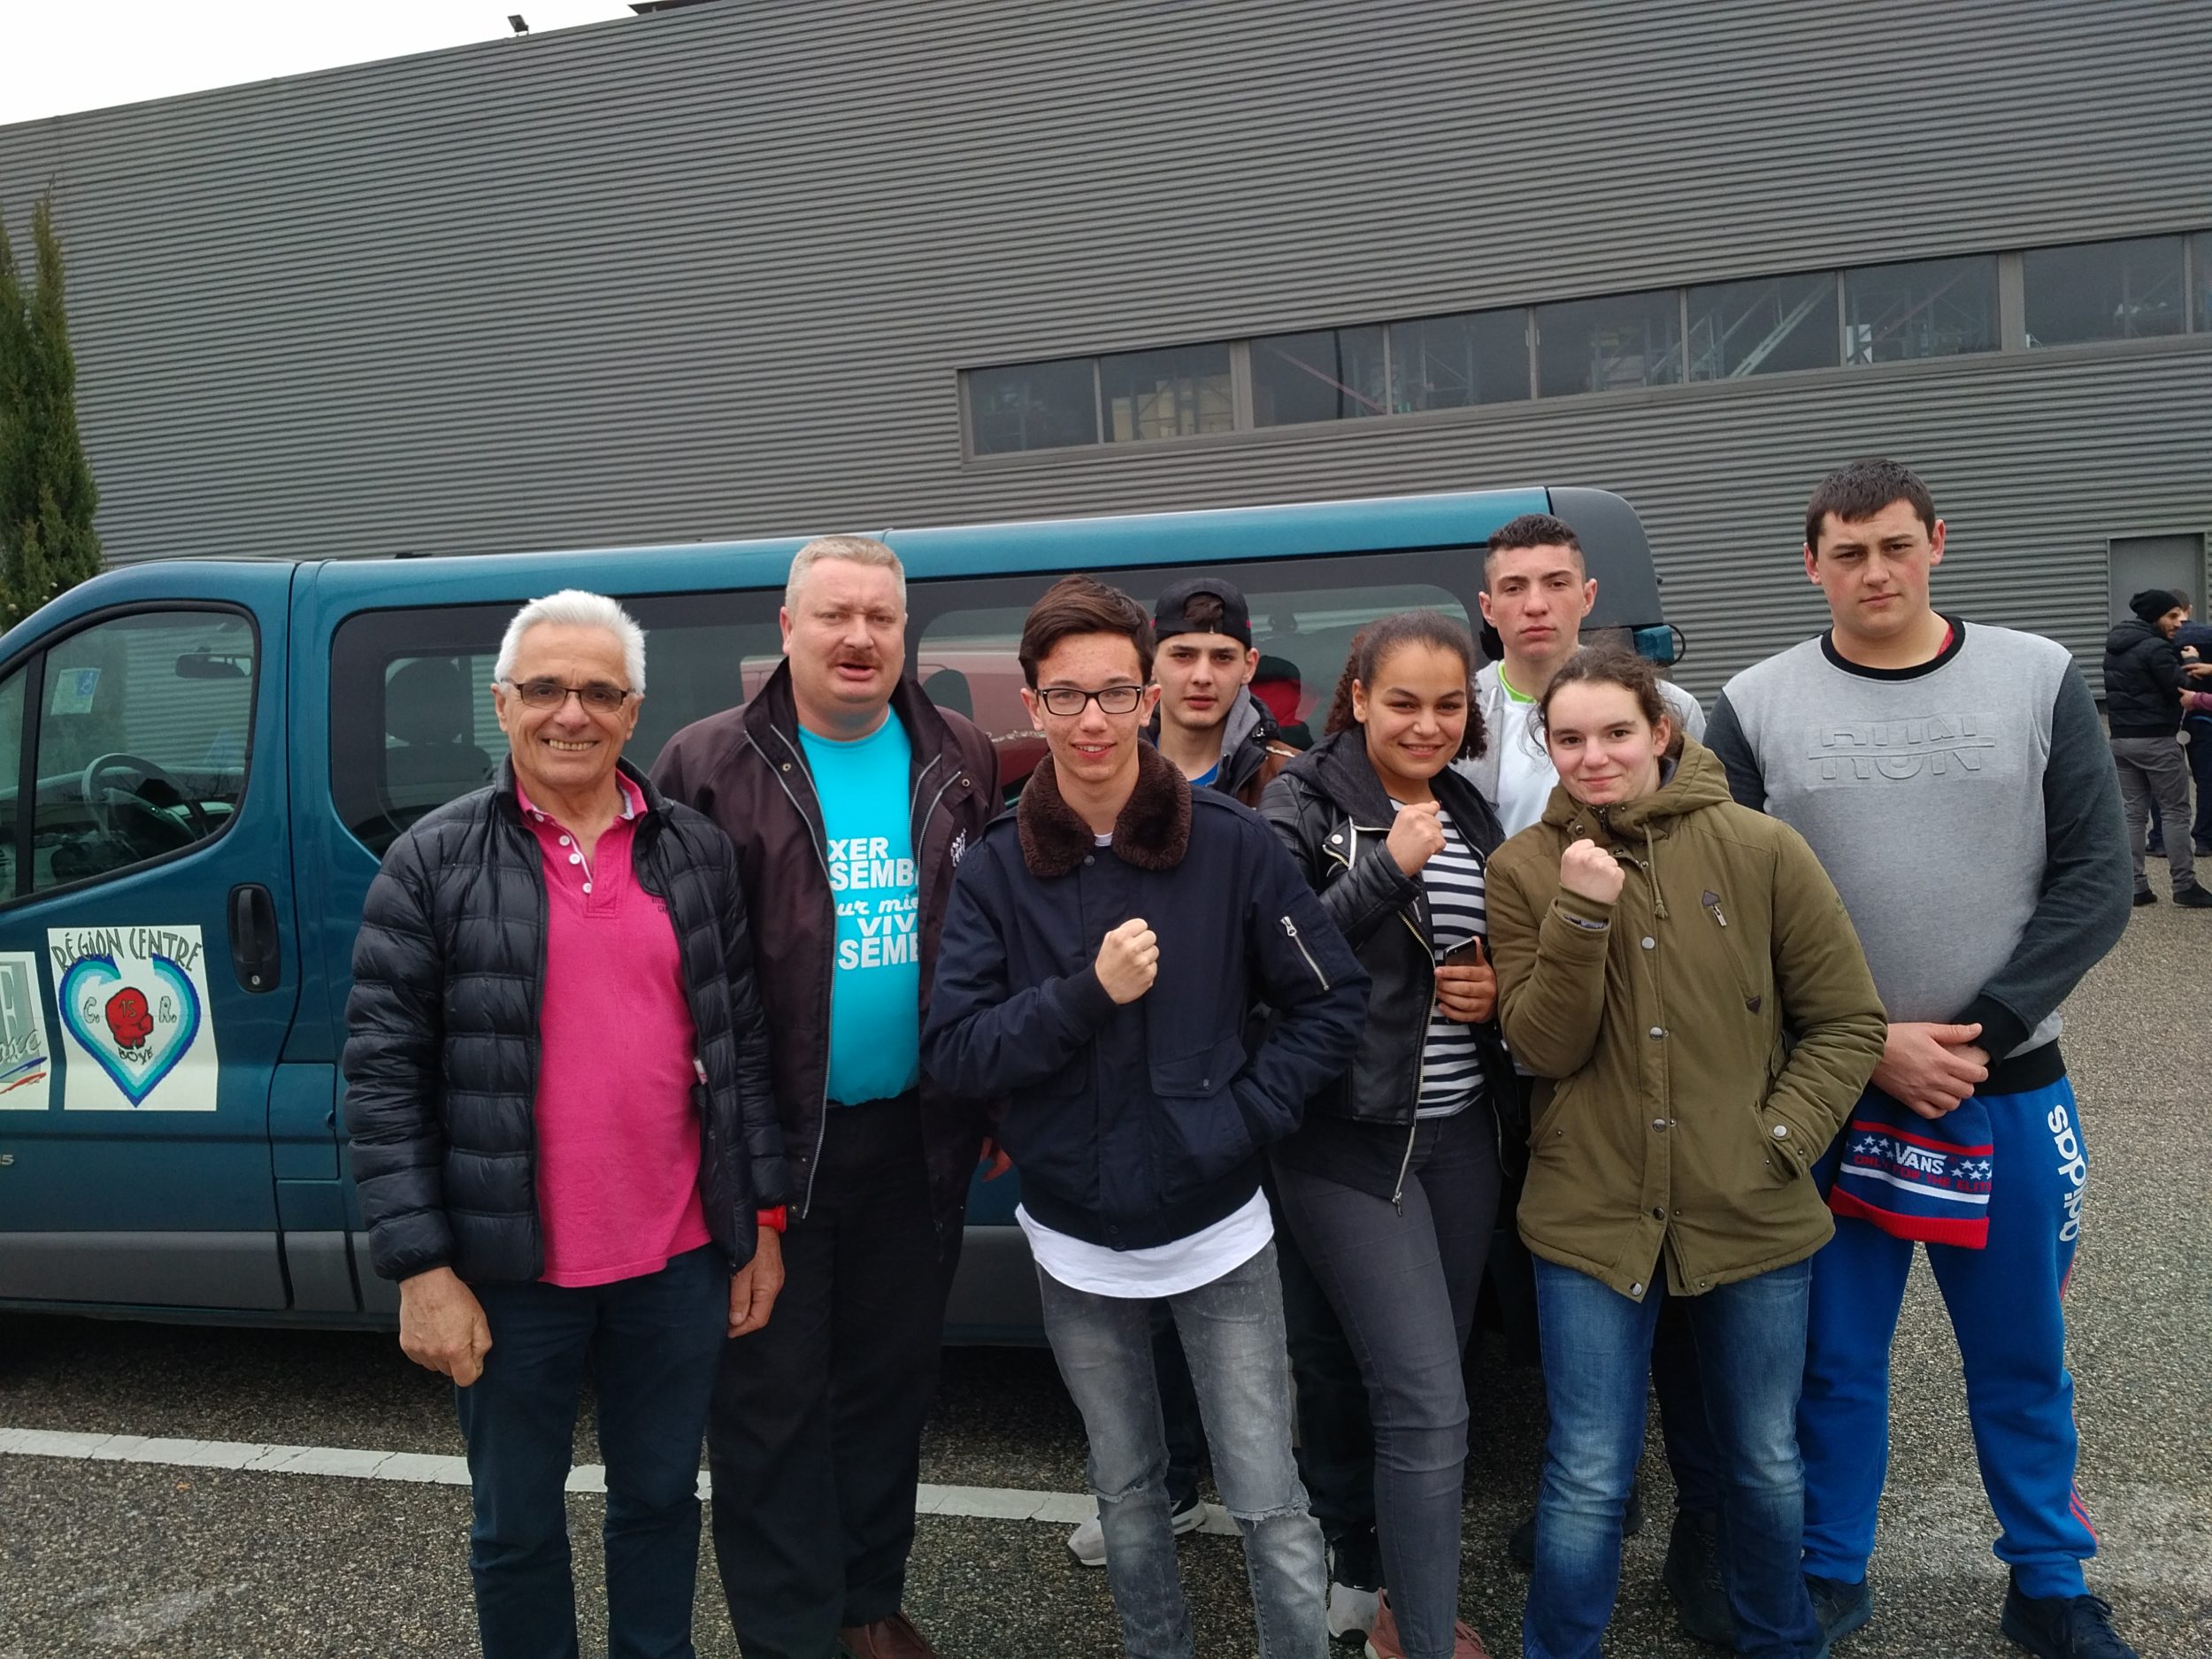 Championnats de France de boxe UNSS (30, 31 mars, 1er Avril) à Bourgoin Jallieu